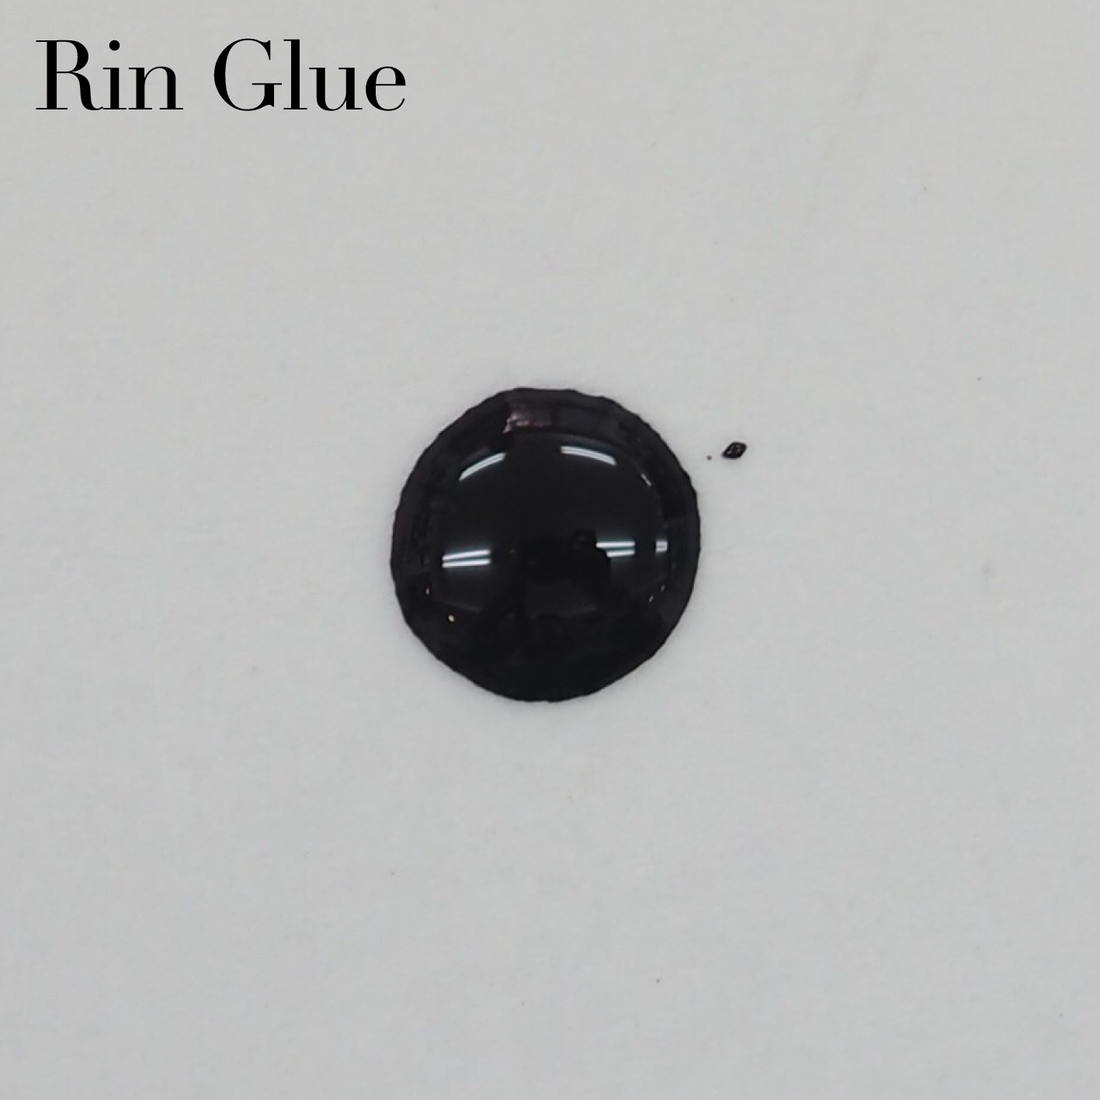 Subscription: Rin GLUE